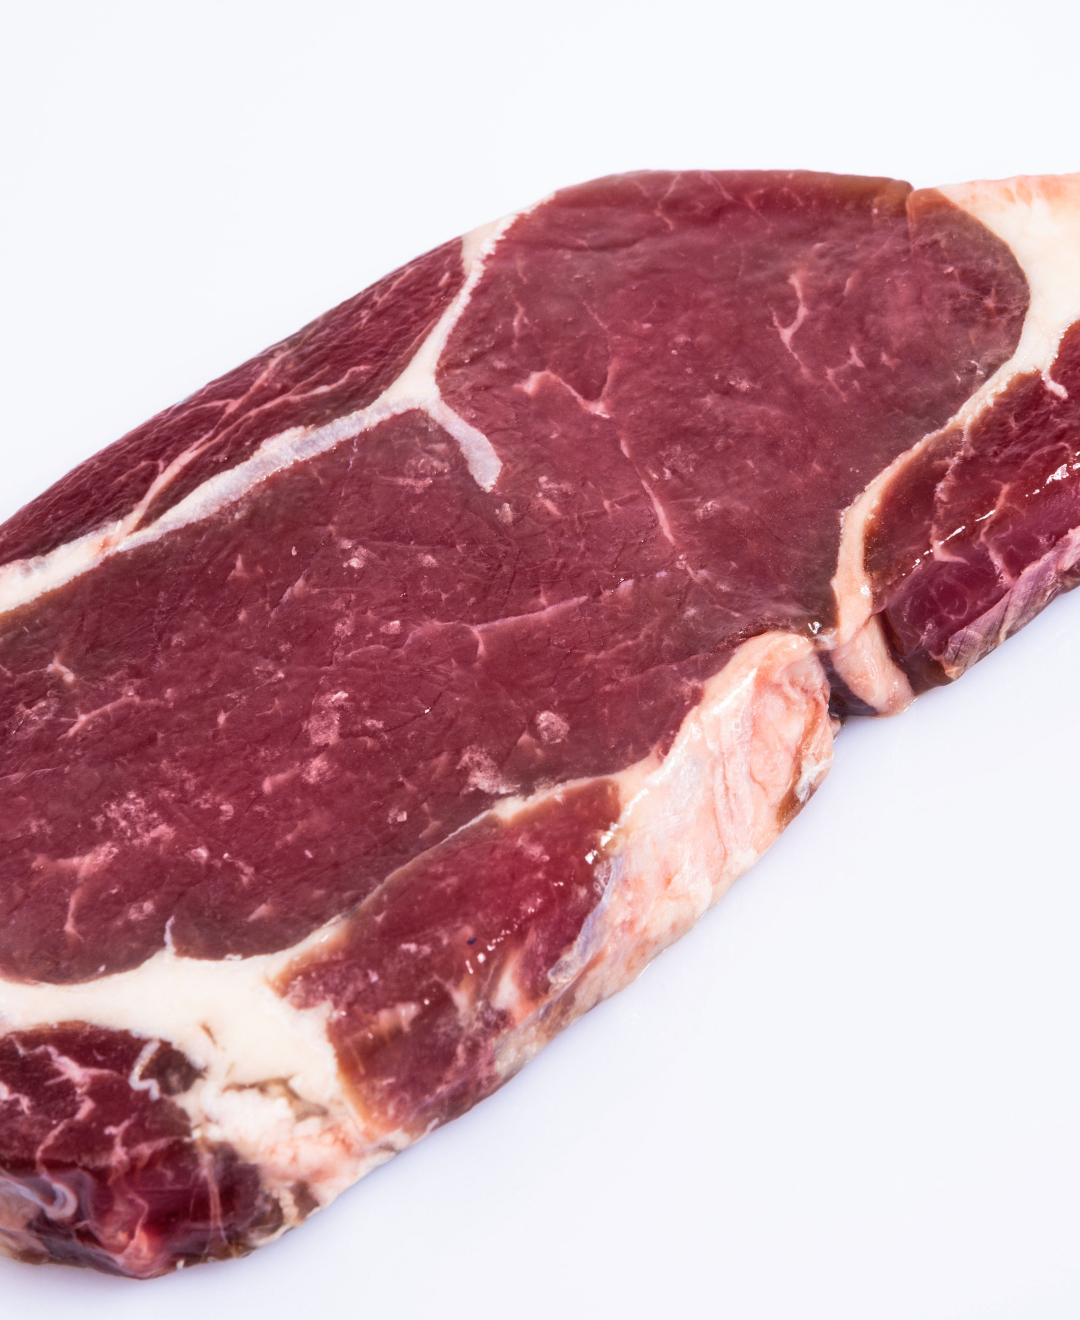 USDA Ribeye Butter-Aged Steak 330g (1" per cut, 1 slice)